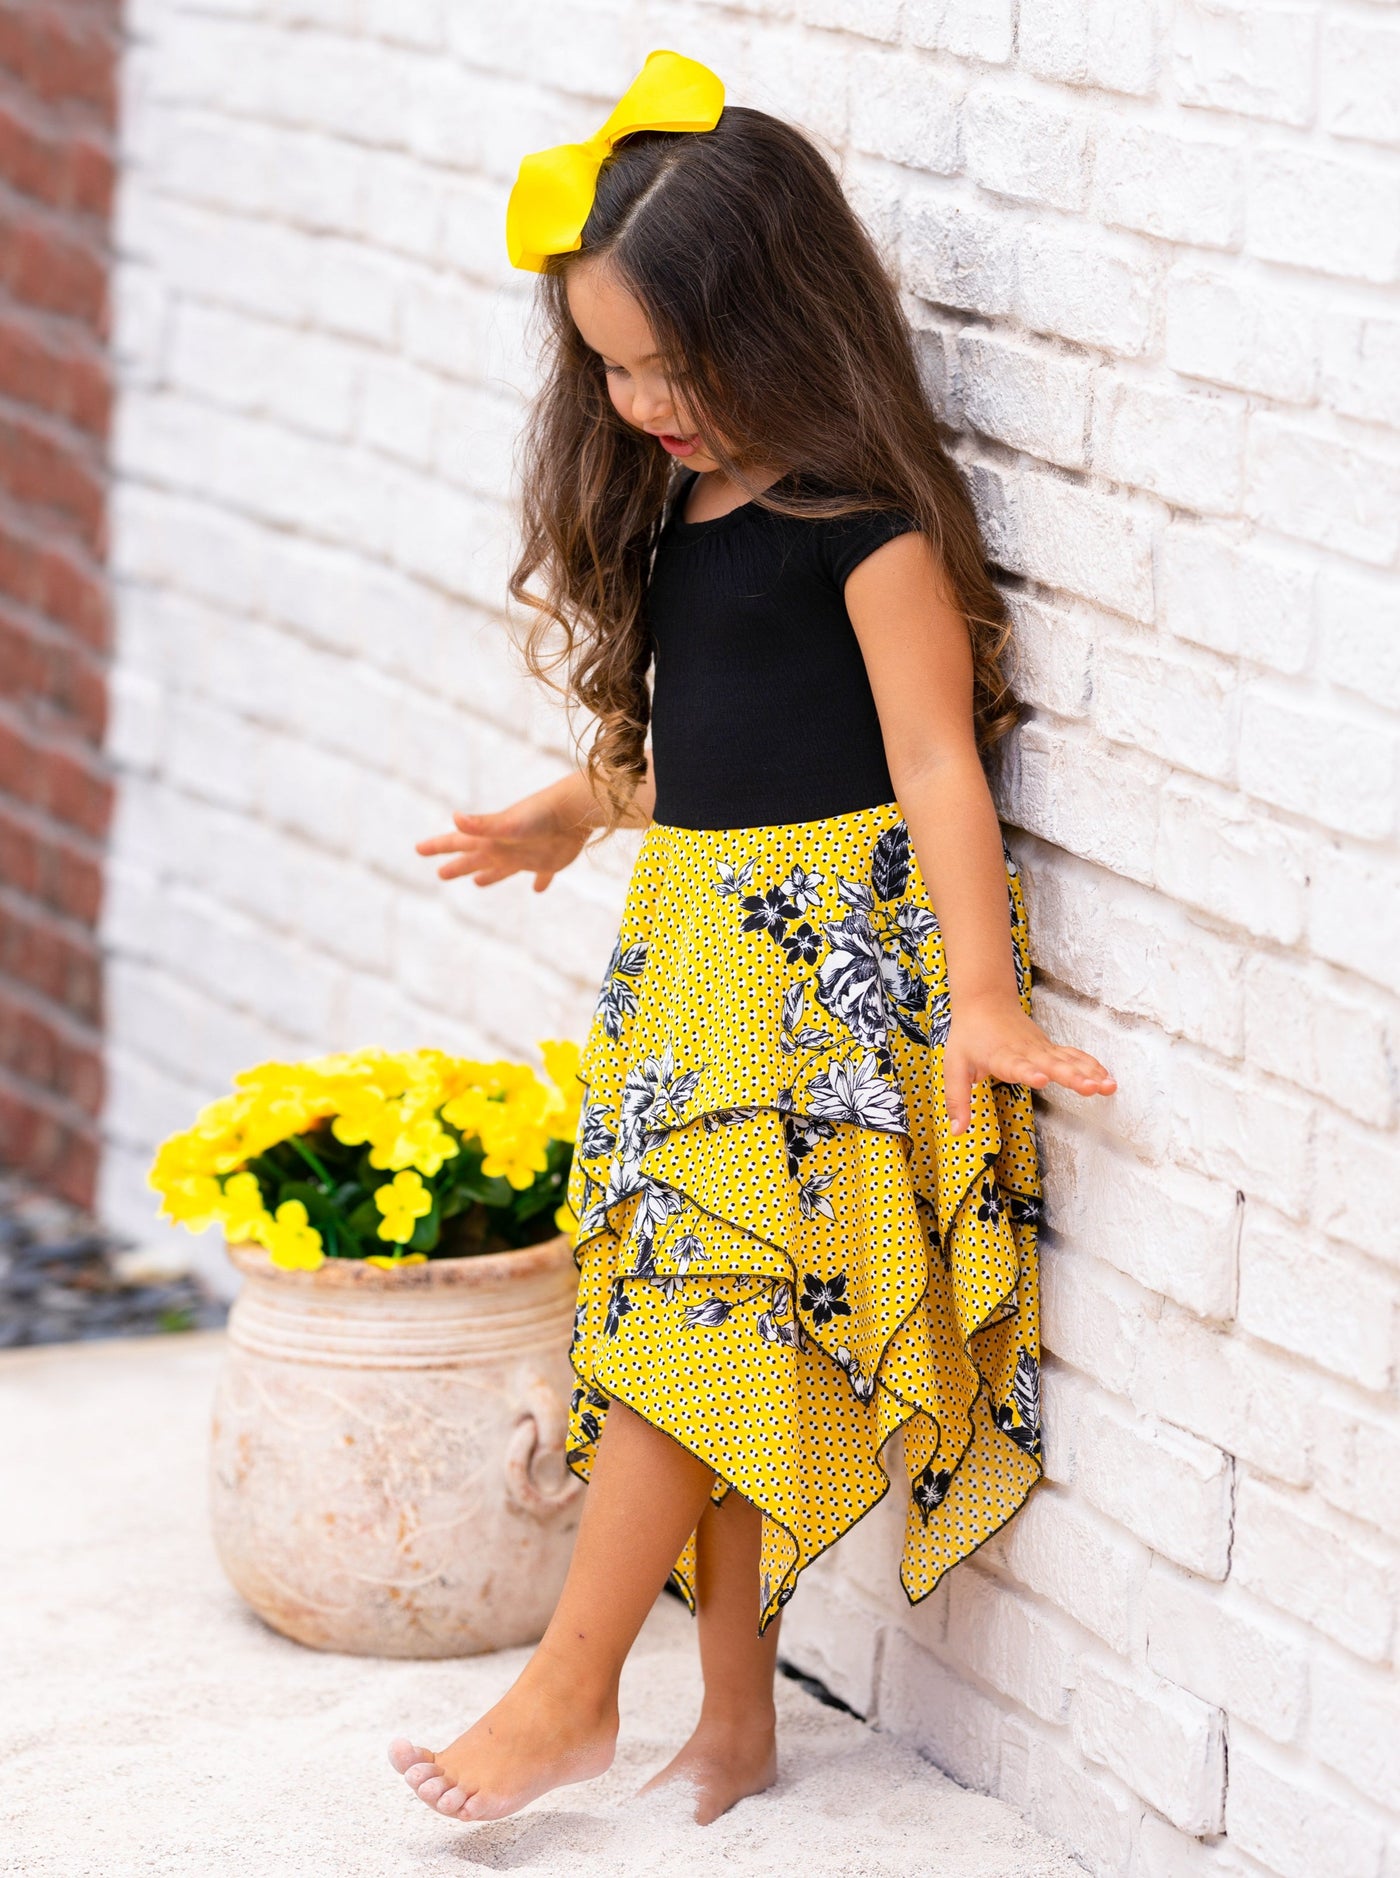 Toddler Spring Dress | Smocked Top Floral Polka Dot Handkerchief Dress